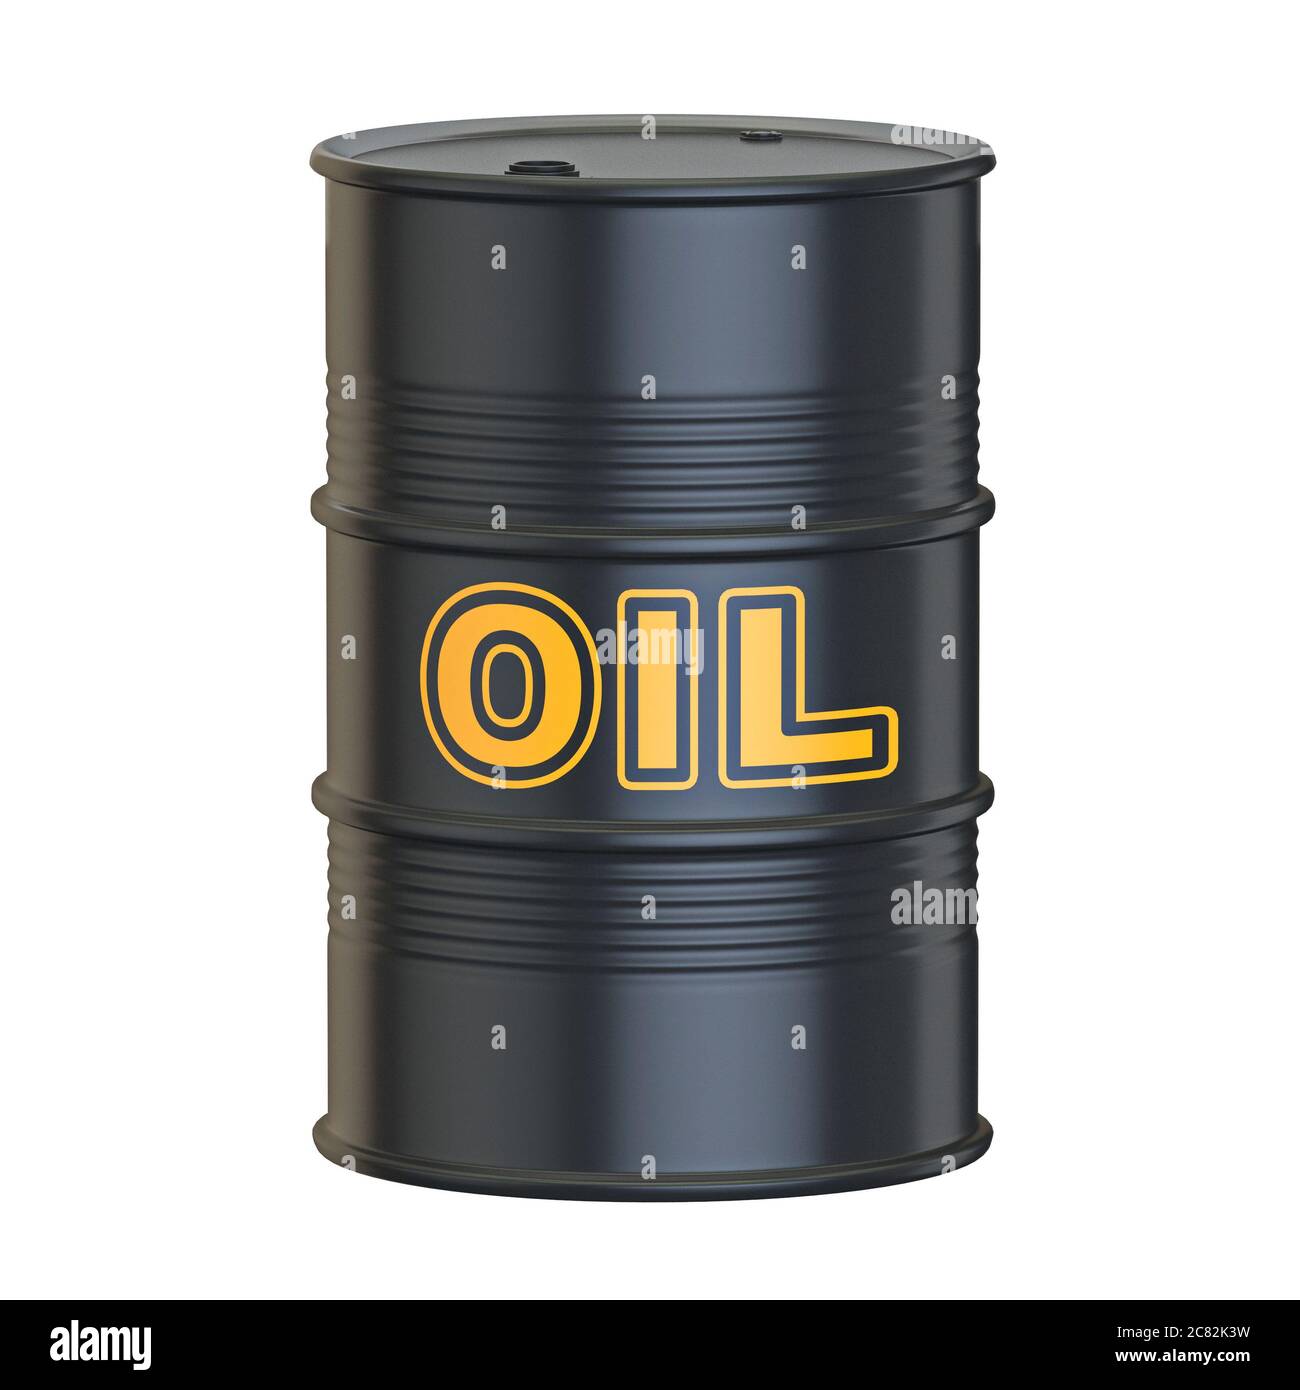 Oil barrel 3D render illustration isolated on white background Stock Photo